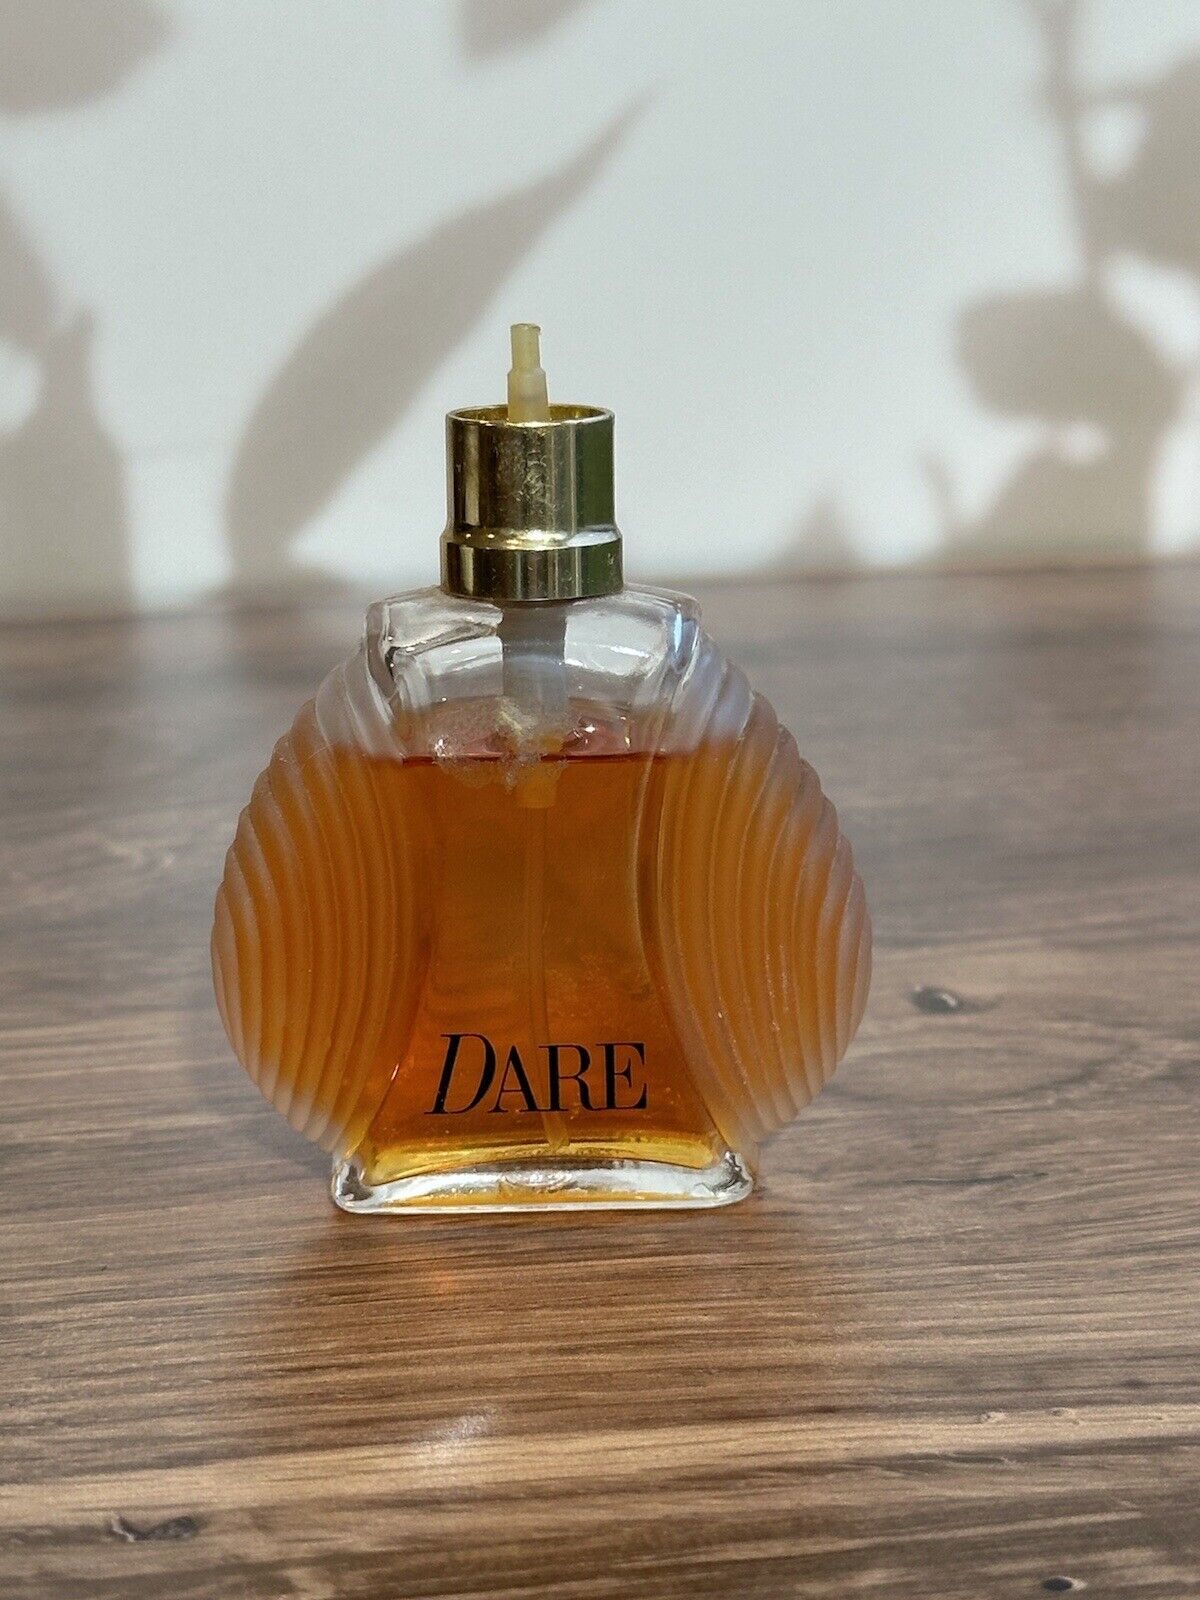 Dare by Quintessence Eau de Parfum Spray 50 ml 1.7oz Vintage Appr 85% Full